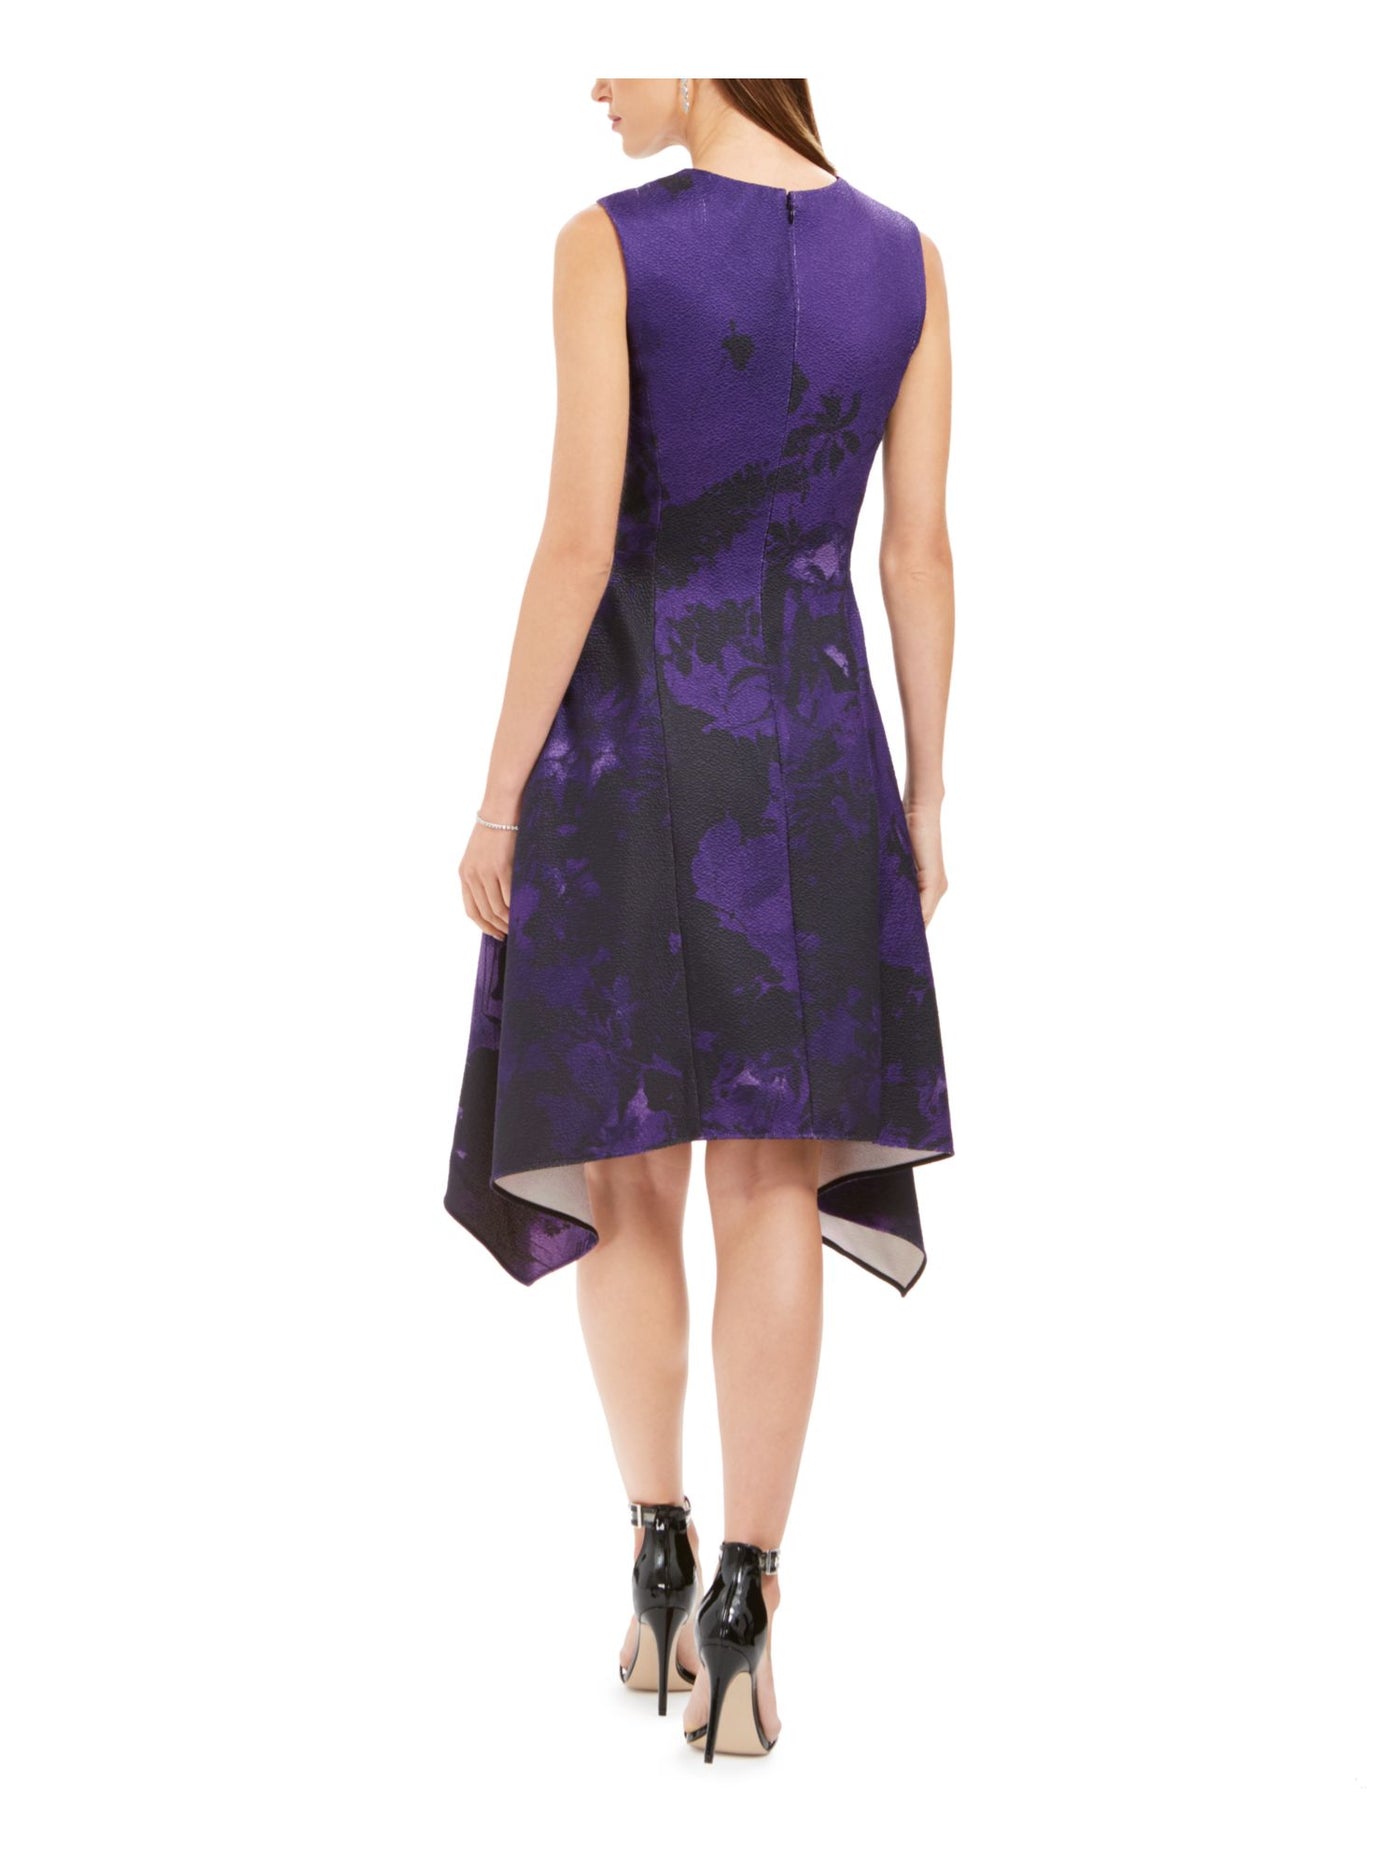 NATORI Womens Purple Zippered Printed Sleeveless Jewel Neck Above The Knee Party Fit + Flare Dress 14